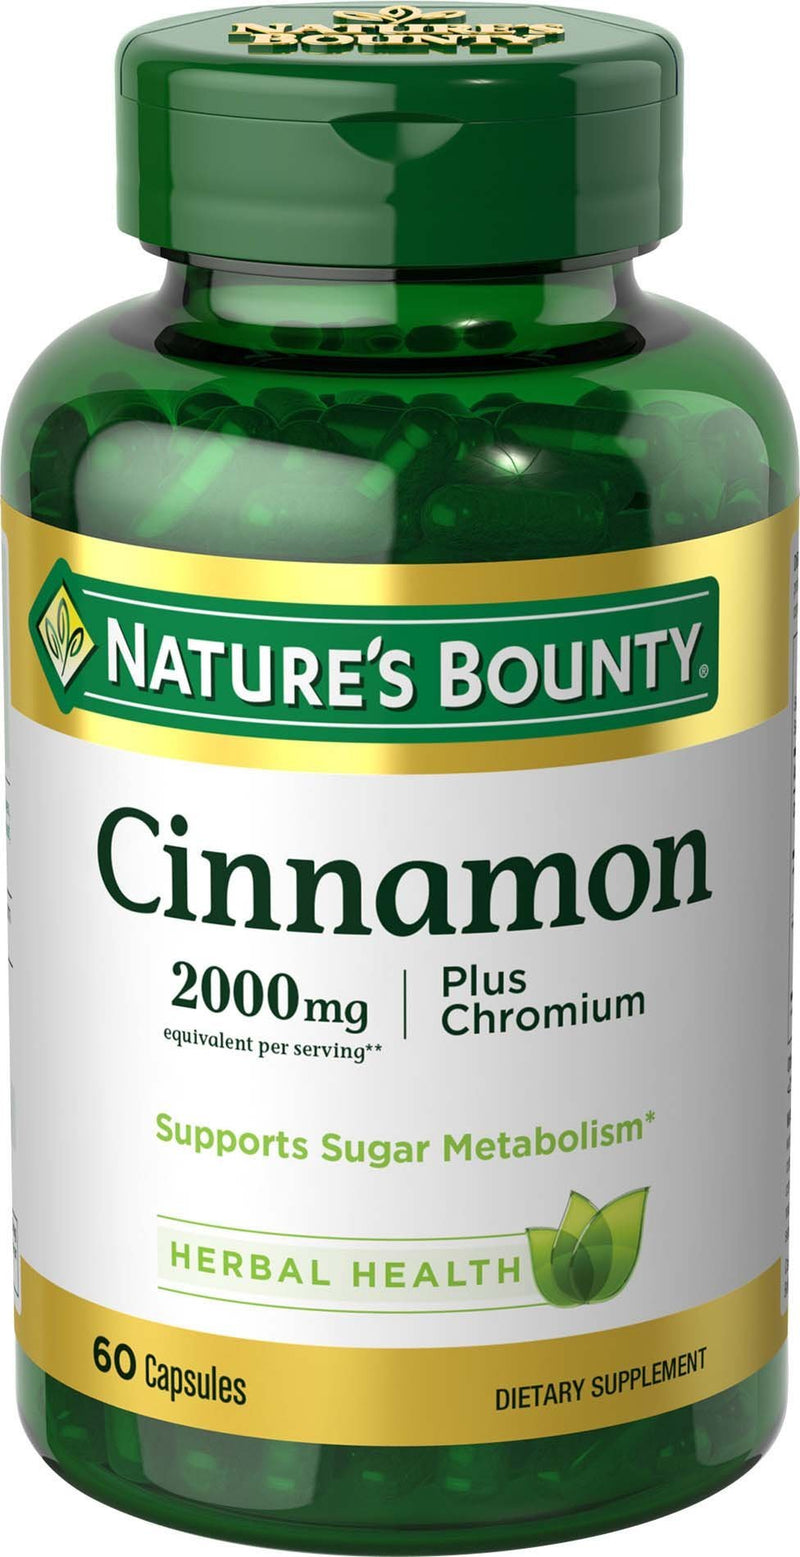 Nature's Bounty Cinnamon Pills and Chromium Herbal Health Supplement, Promotes Sugar Metabolism and Heart Health, 2000g, 60 Capsules - BeesActive Australia